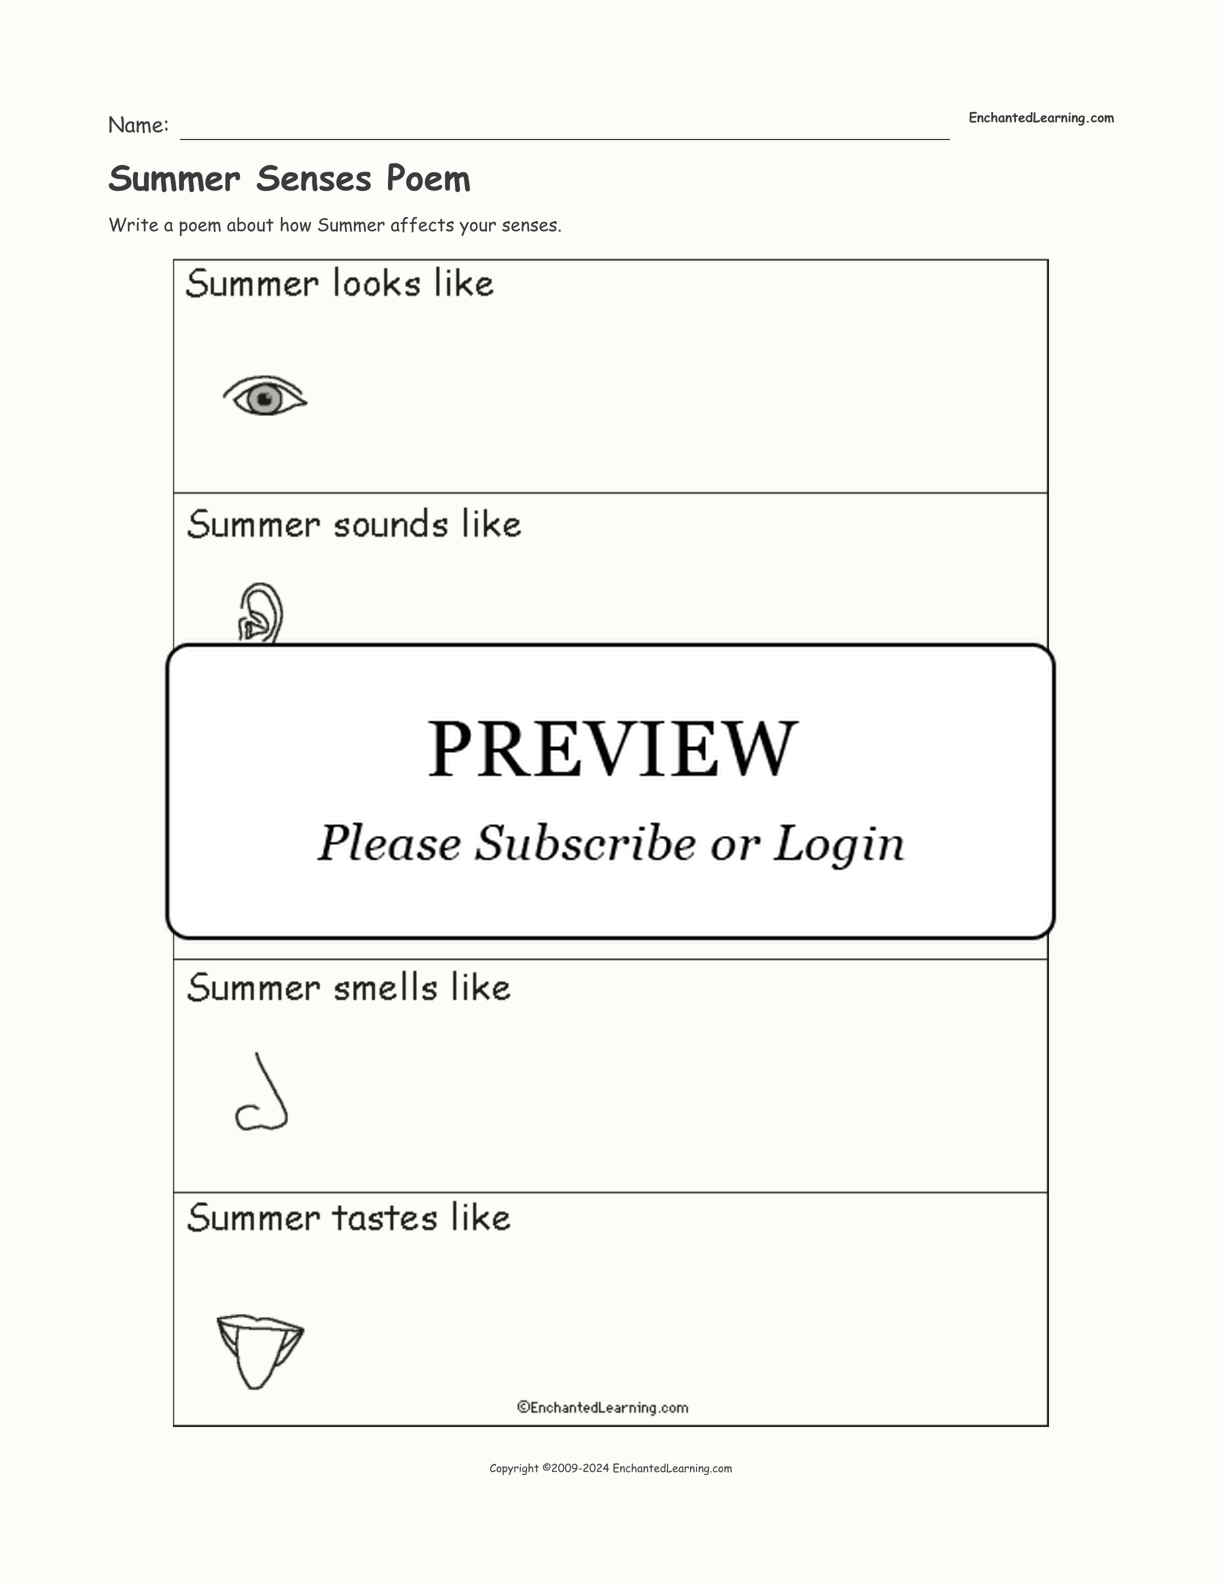 Summer Senses Poem interactive worksheet page 1